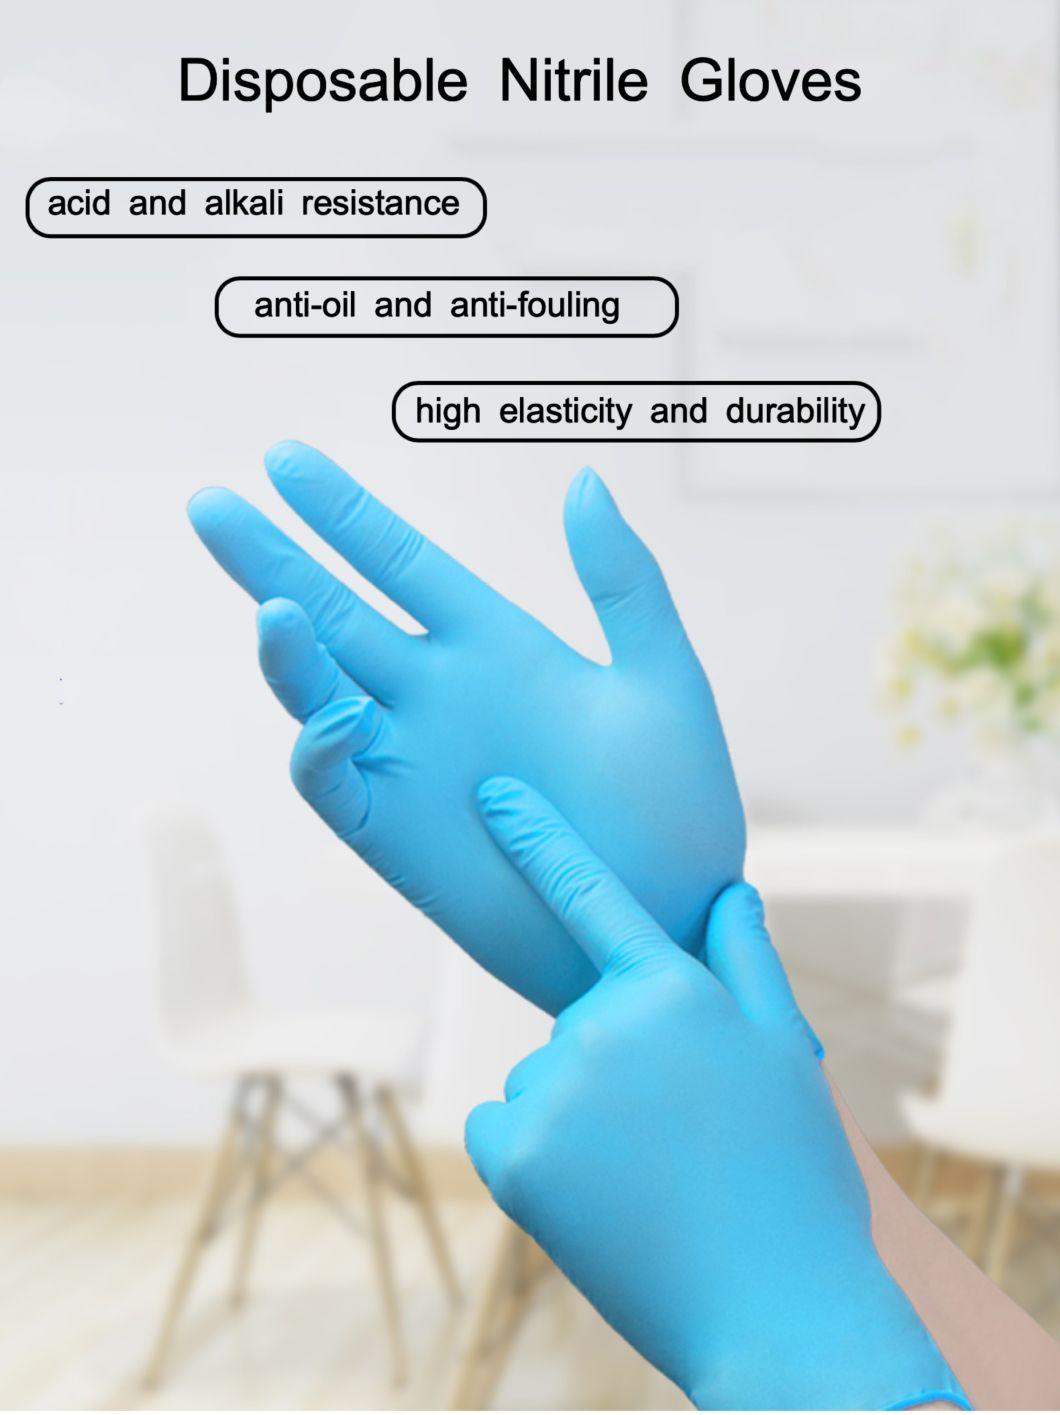 Disposable Nitrile Examination Gloves with 510K En455 for Hospital Chemical Lab